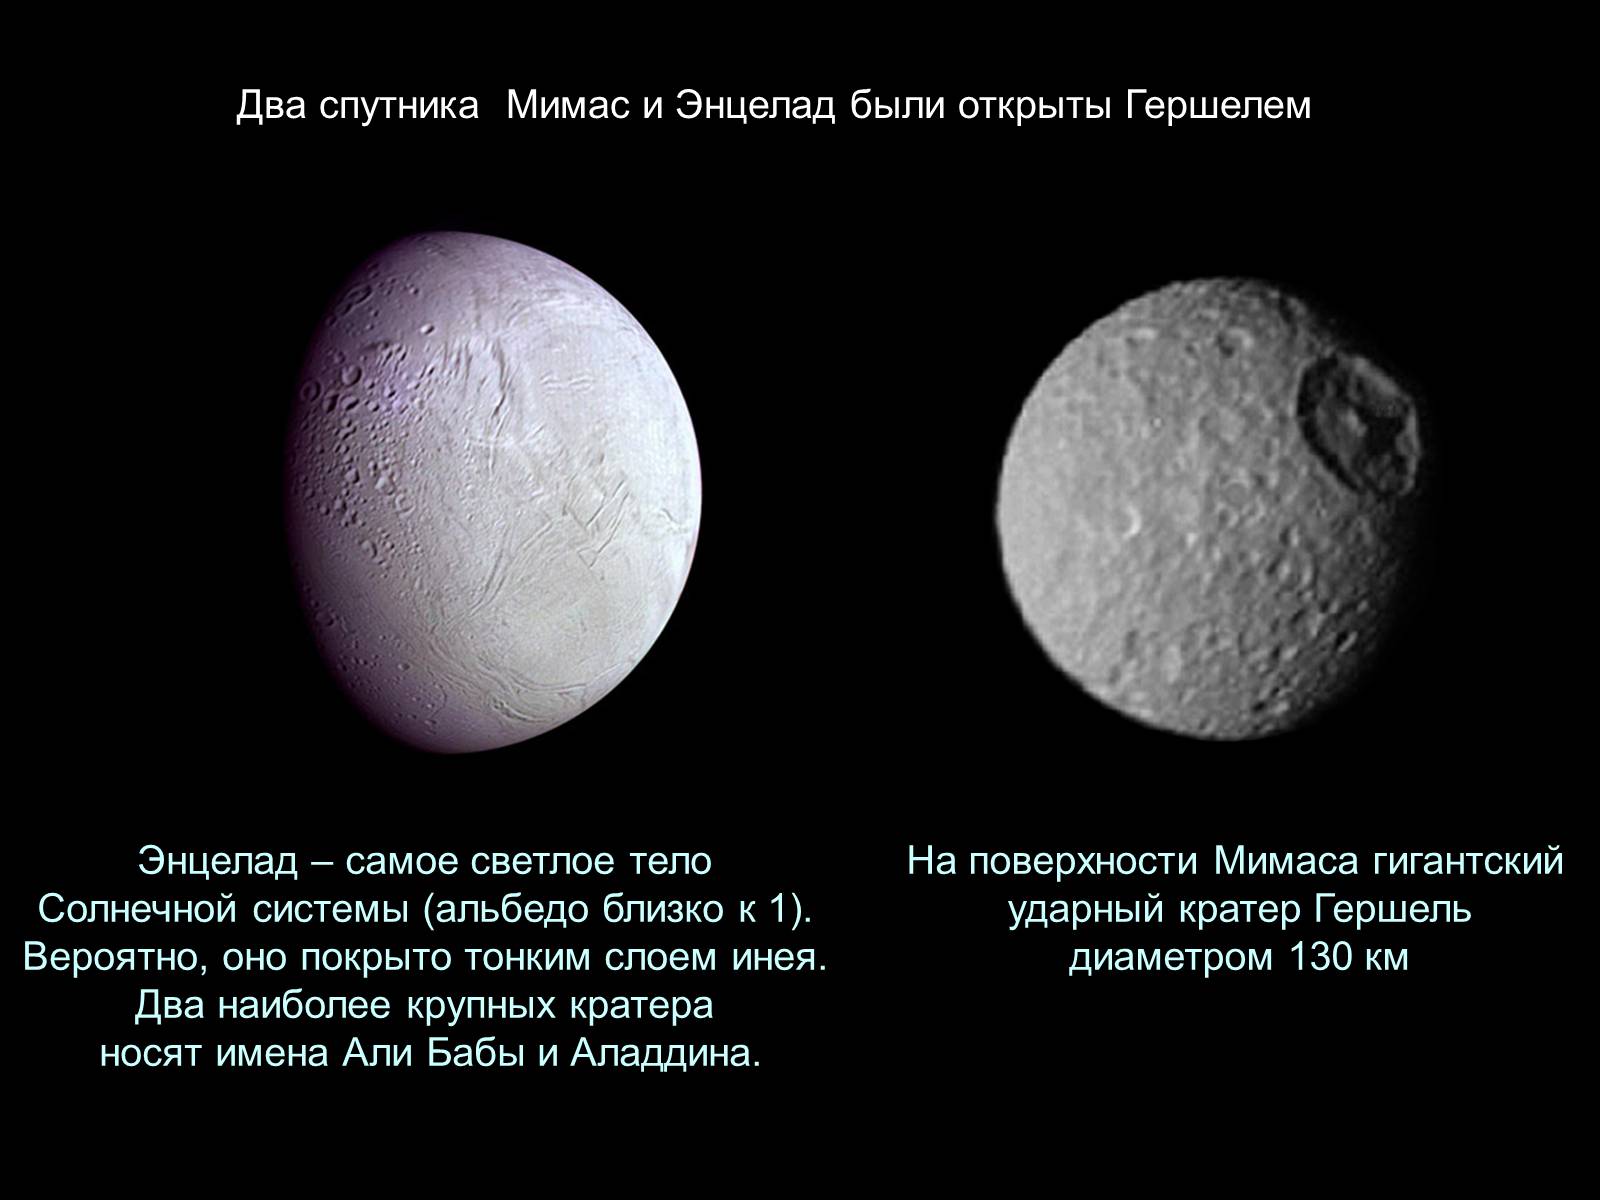 Спутники Сатурна Энцелад, Тефия